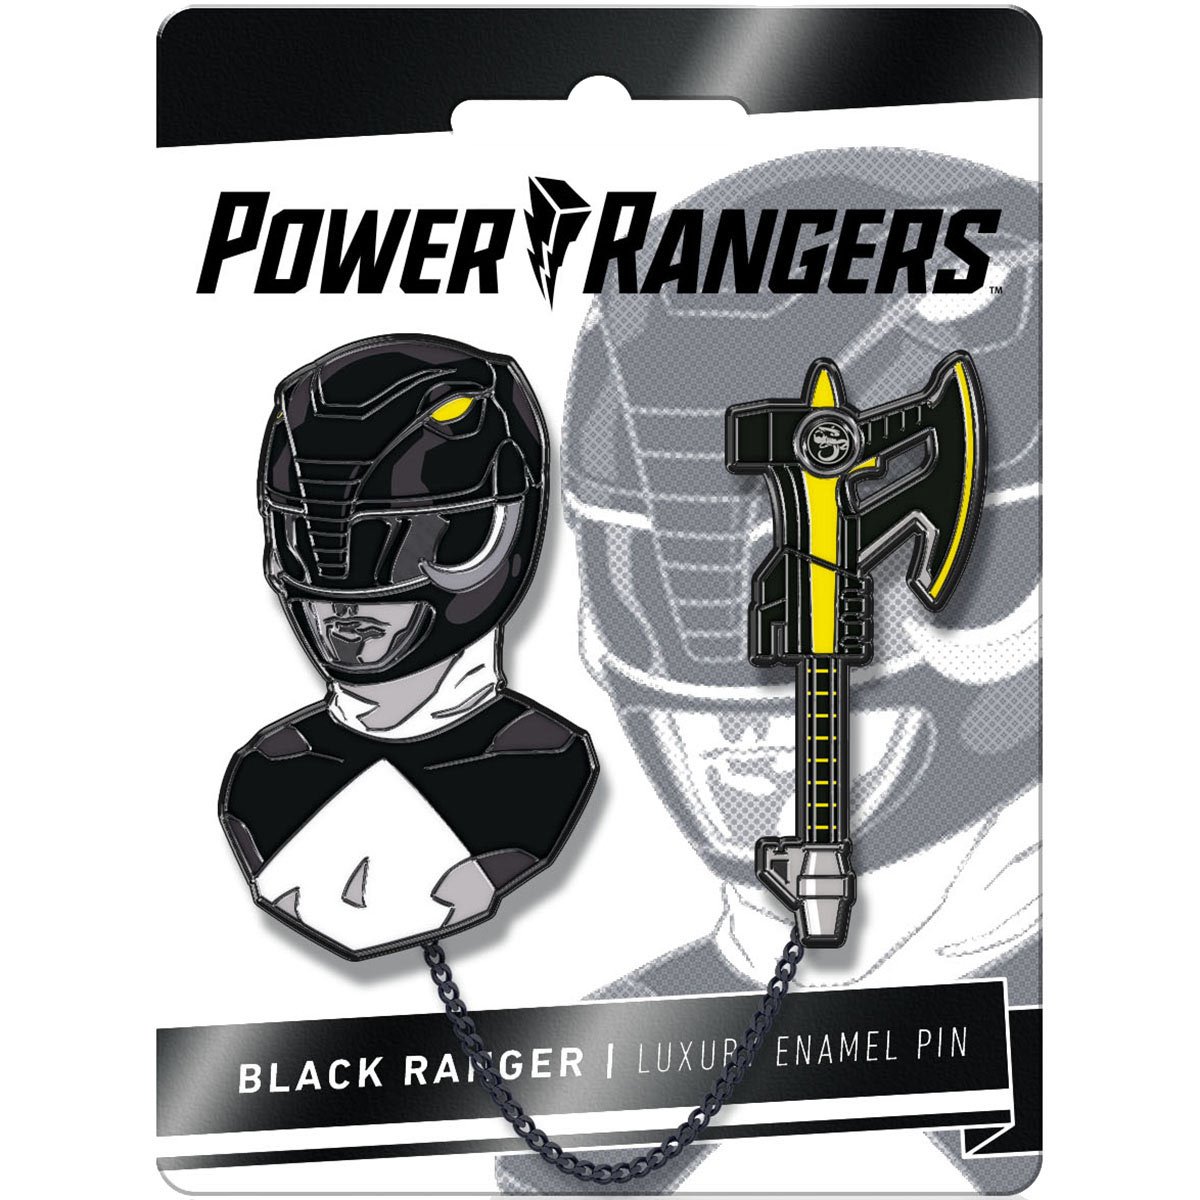 Mighty Morphin Power Rangers Black Ranger Luxury Enamel Pin